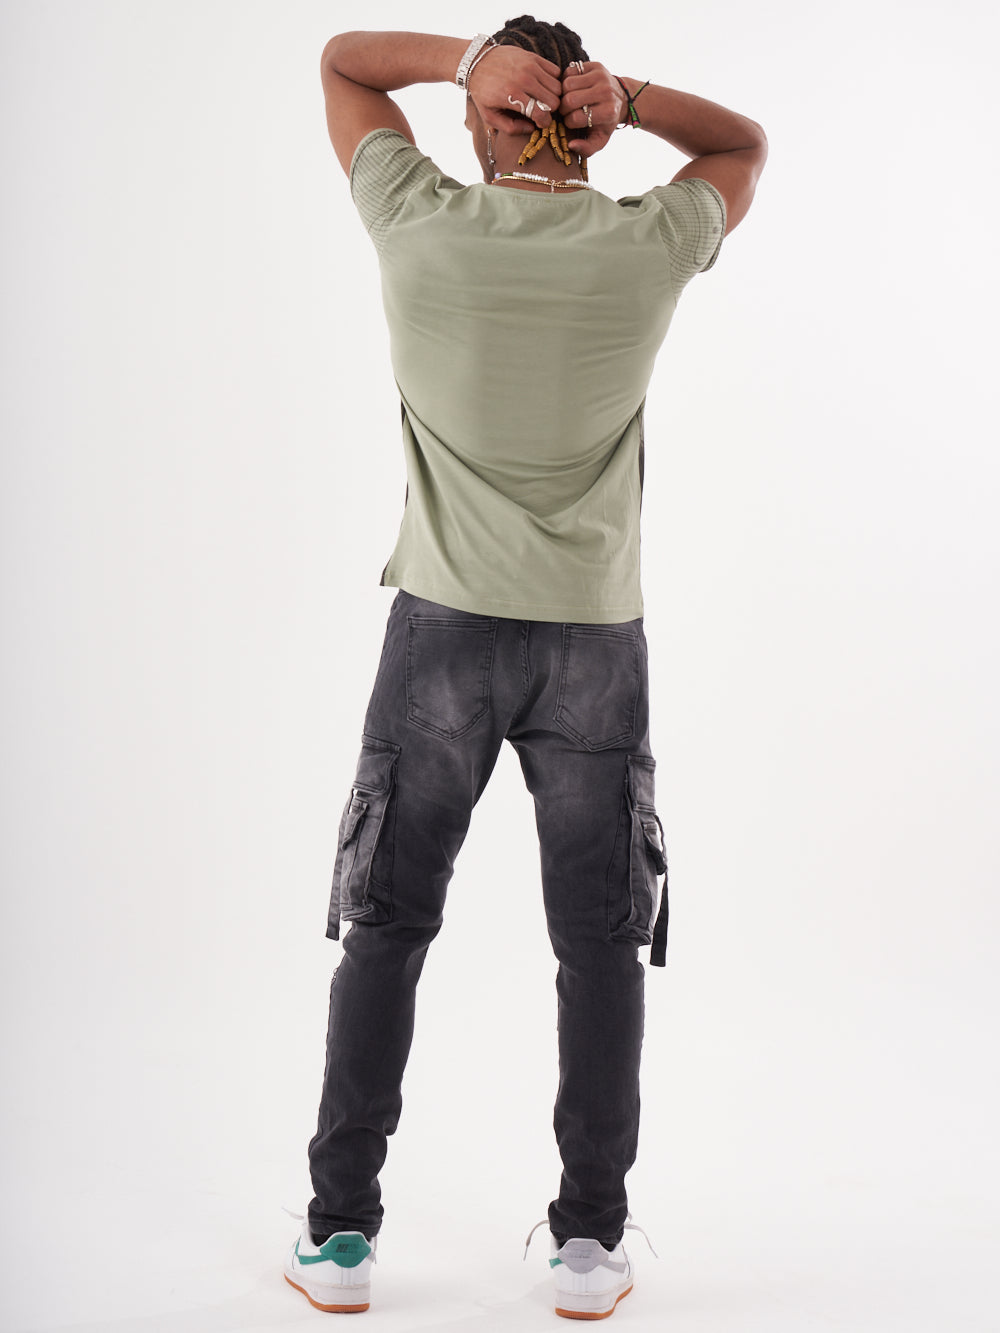 A man wearing cargo pants and a NIRVANA T-SHIRT | GREEN.